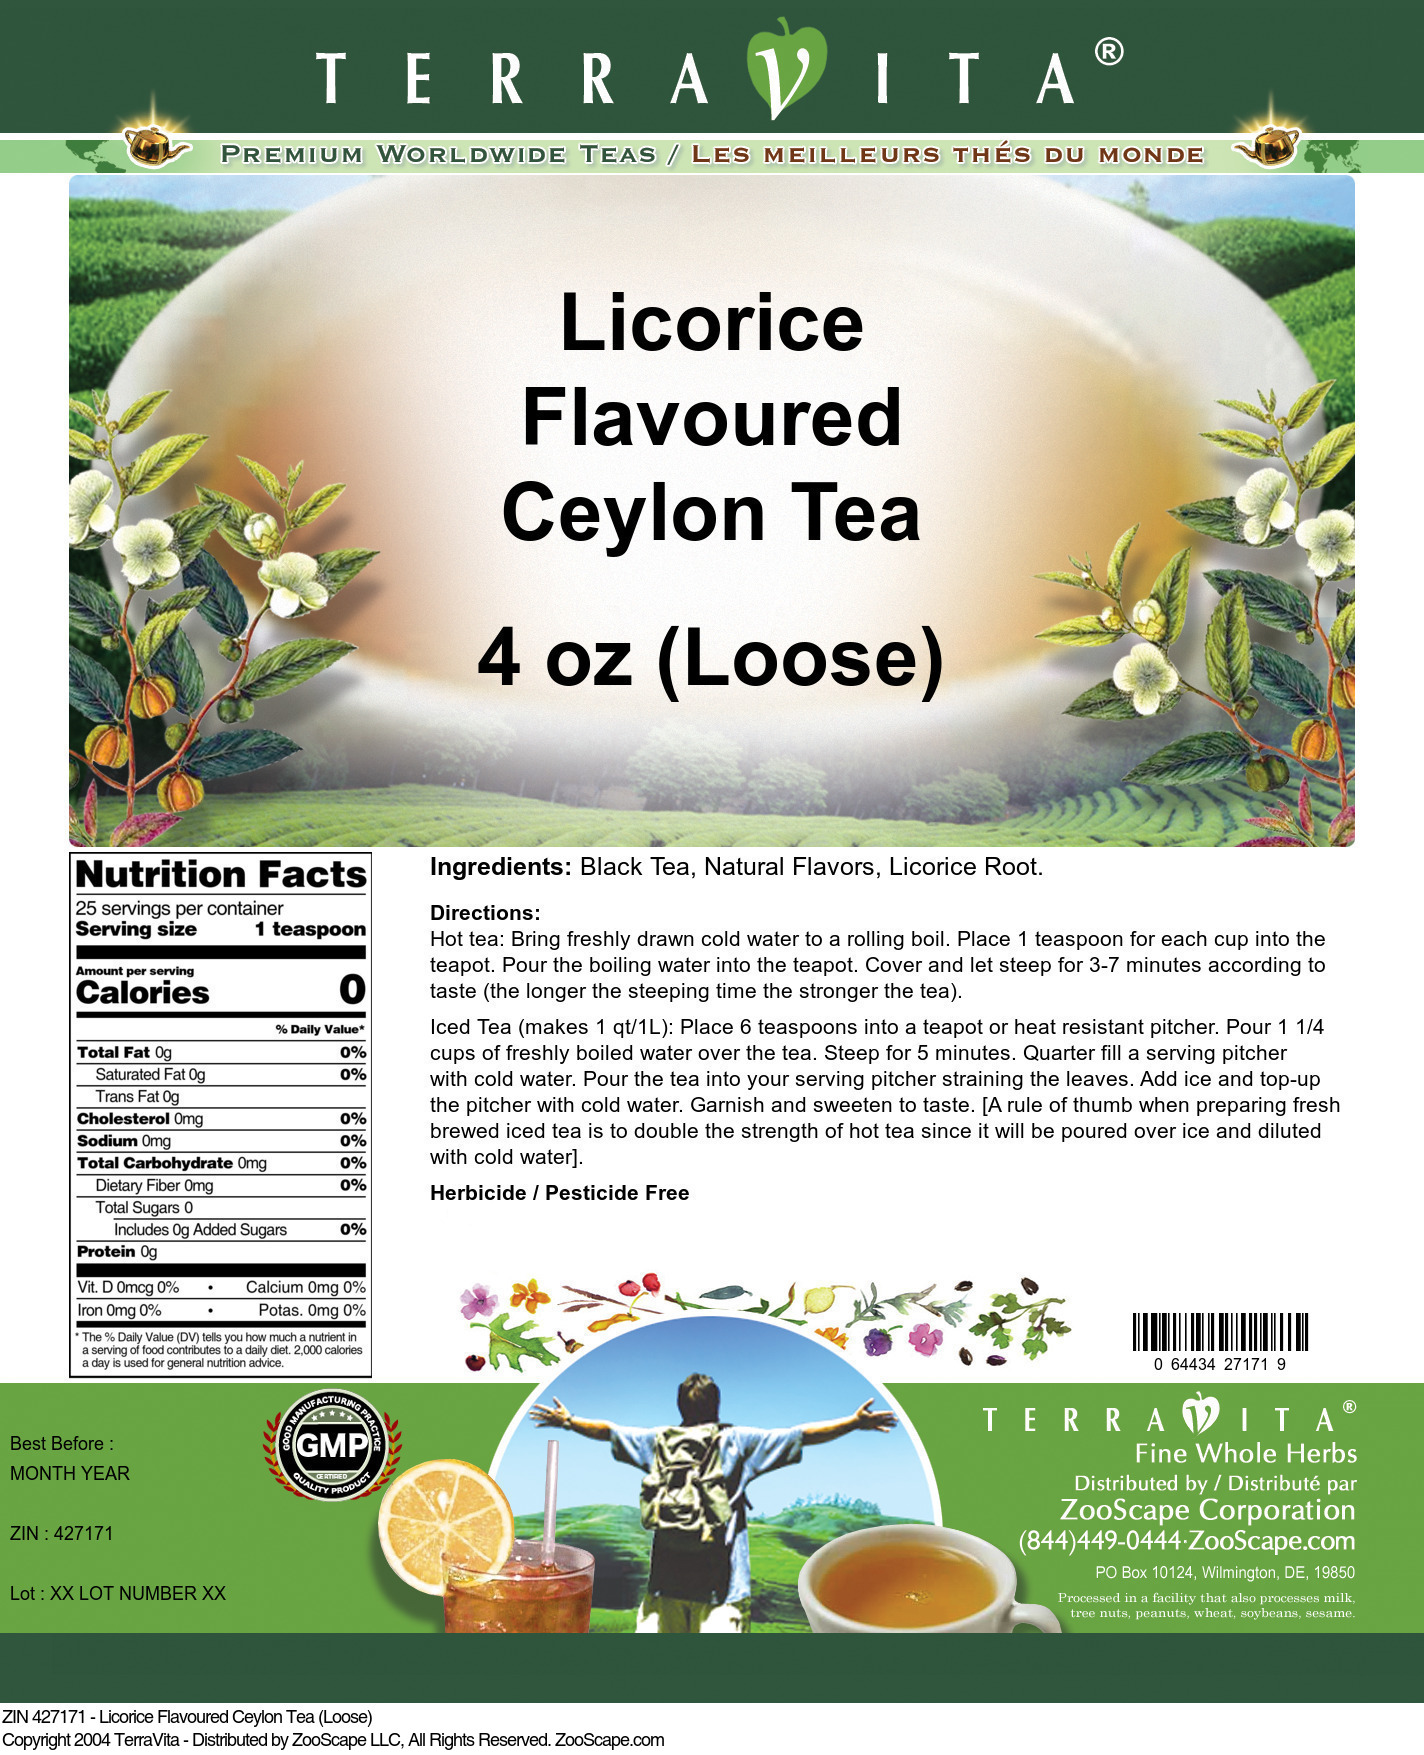 Licorice Flavoured Ceylon Tea (Loose) - Label